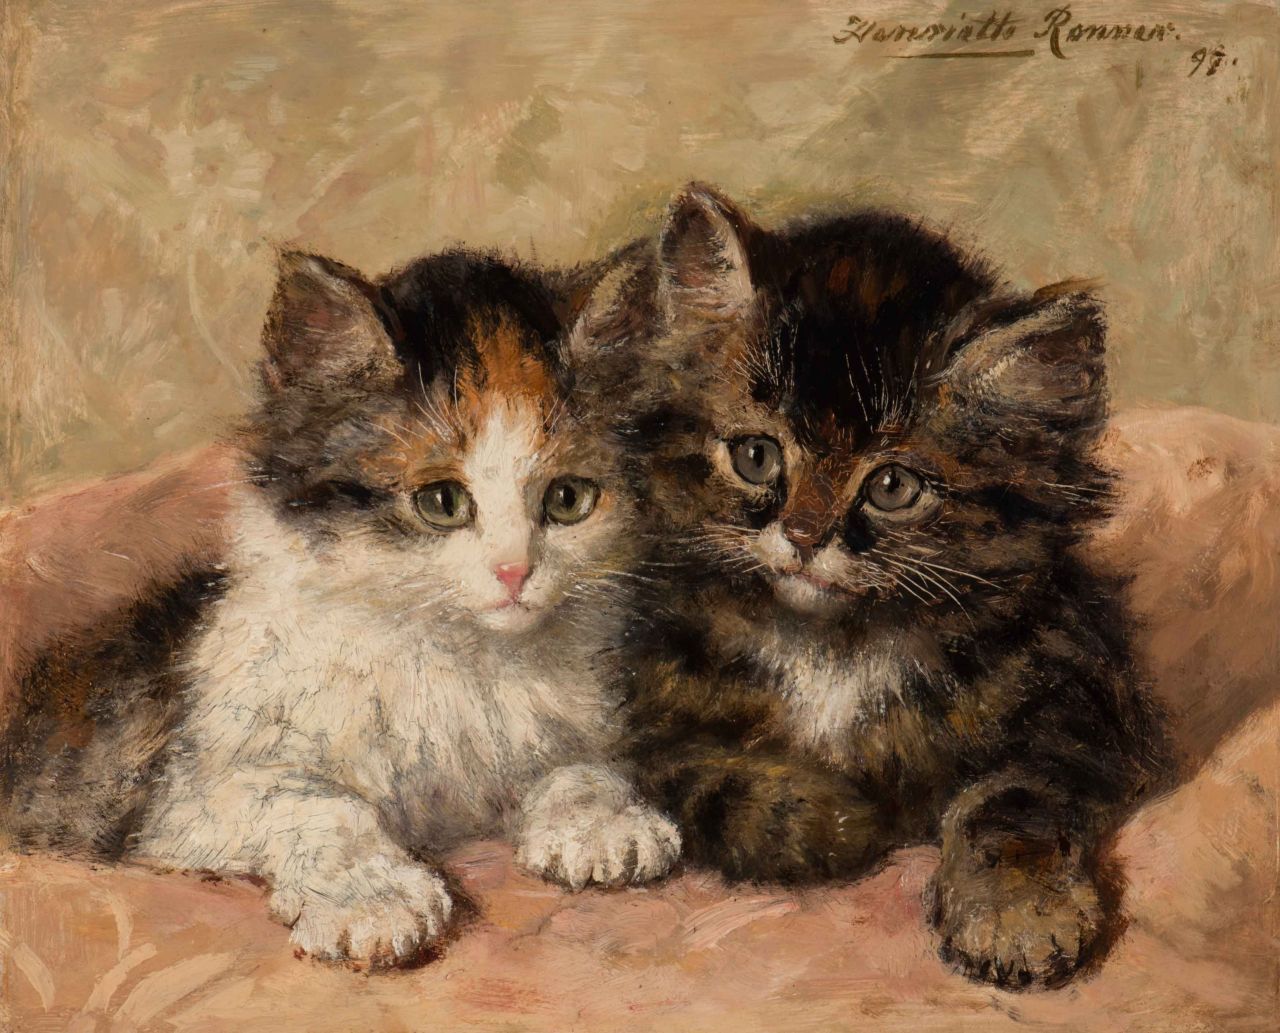 Ronner-Knip H.  | Henriette Ronner-Knip, Twee kittens, olieverf op paneel 19,5 x 23,6 cm, gesigneerd rechtsboven en gedateerd '97